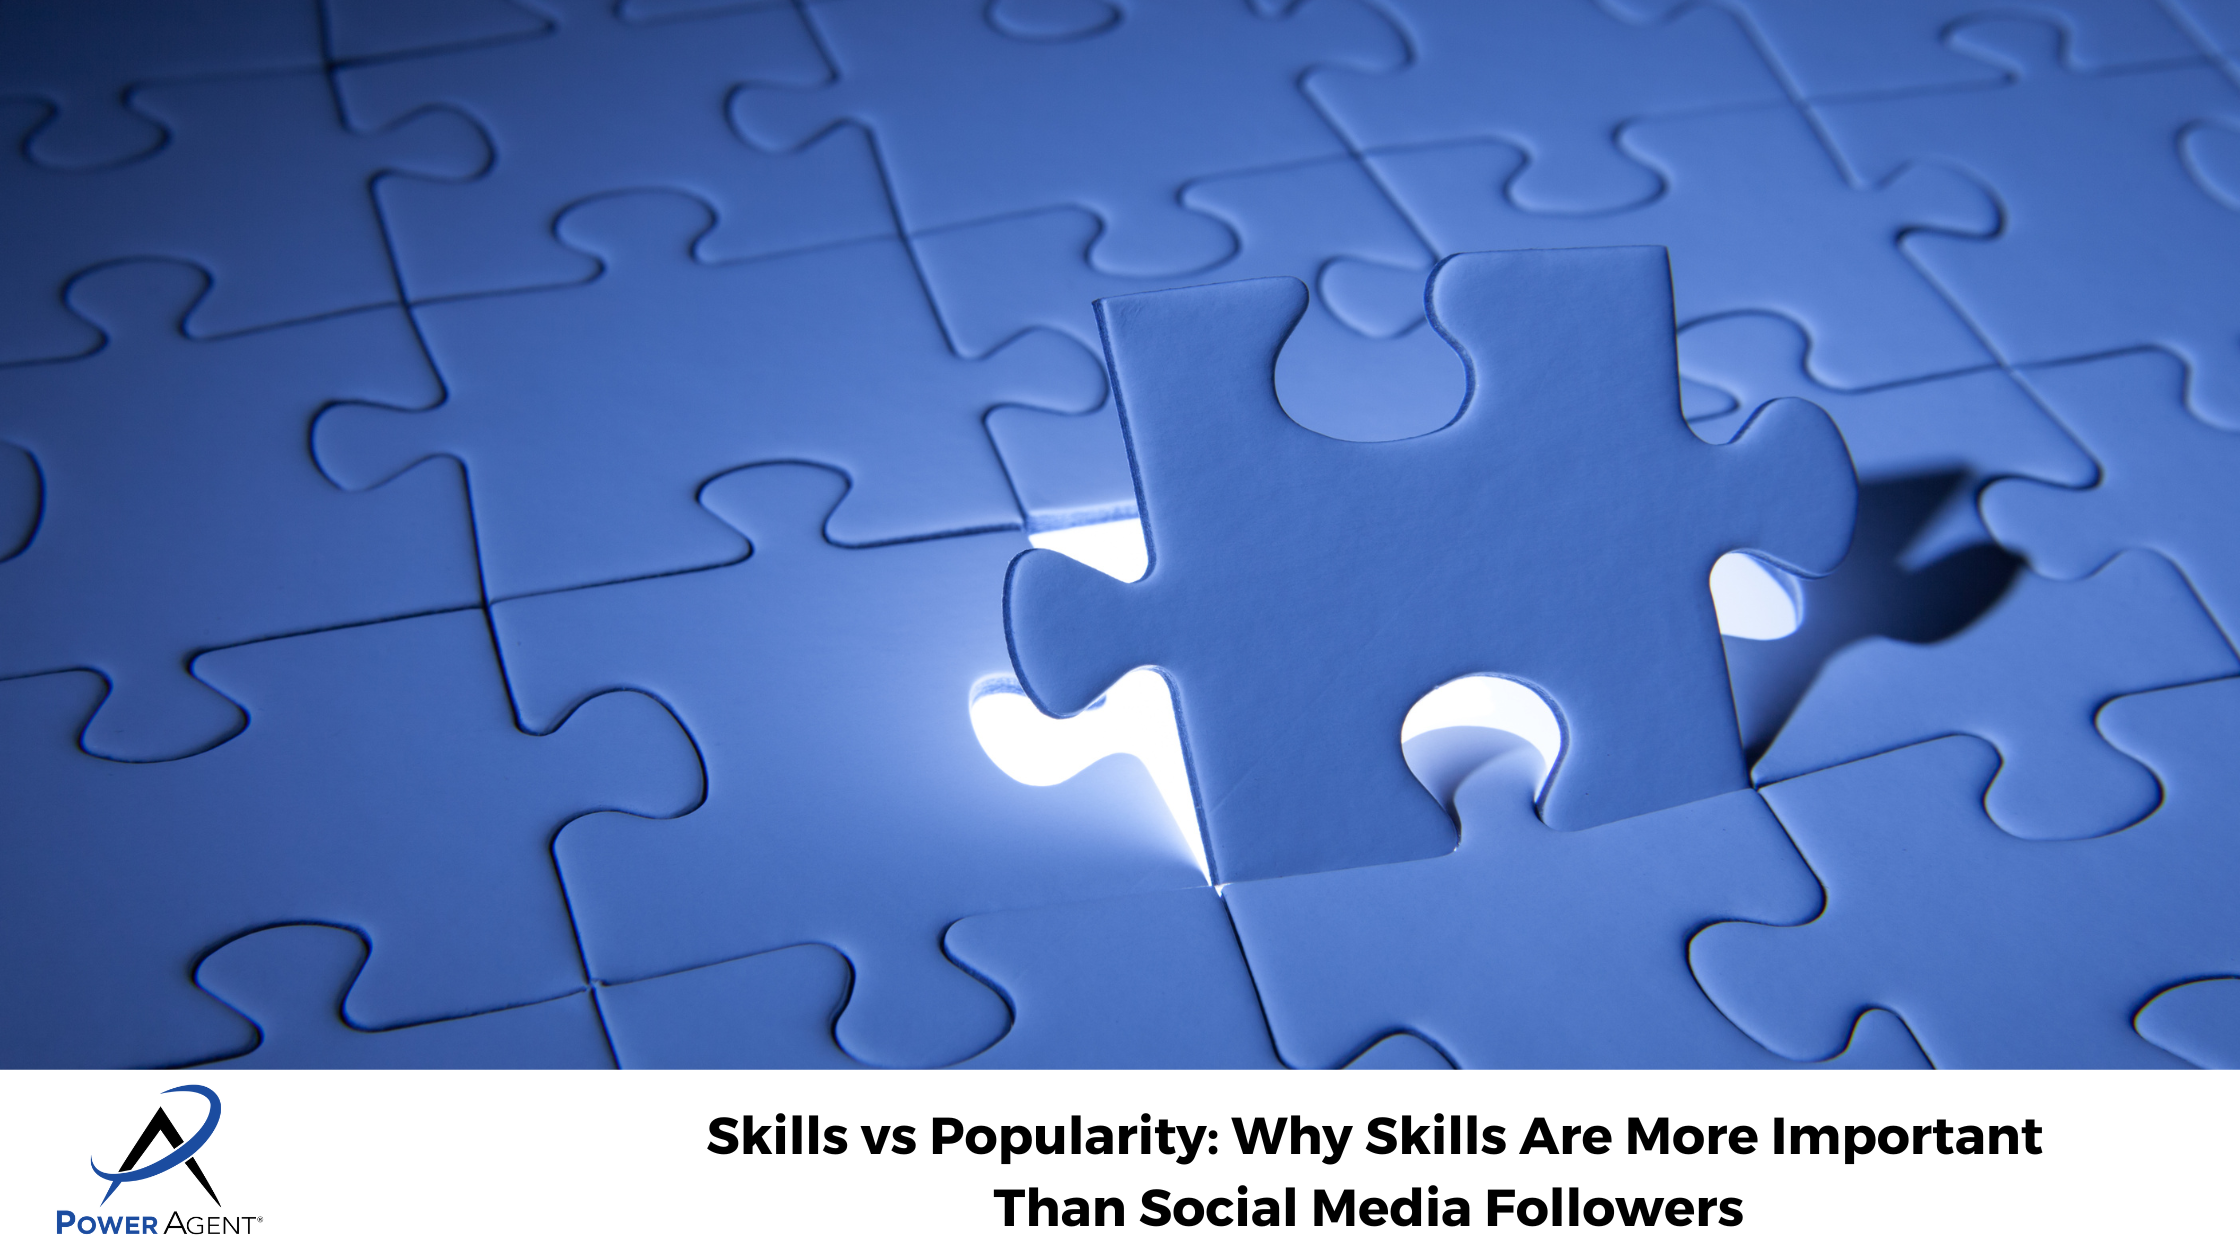 Skills vs Popularity: Why Skills Are More Important Than Social Media Followers